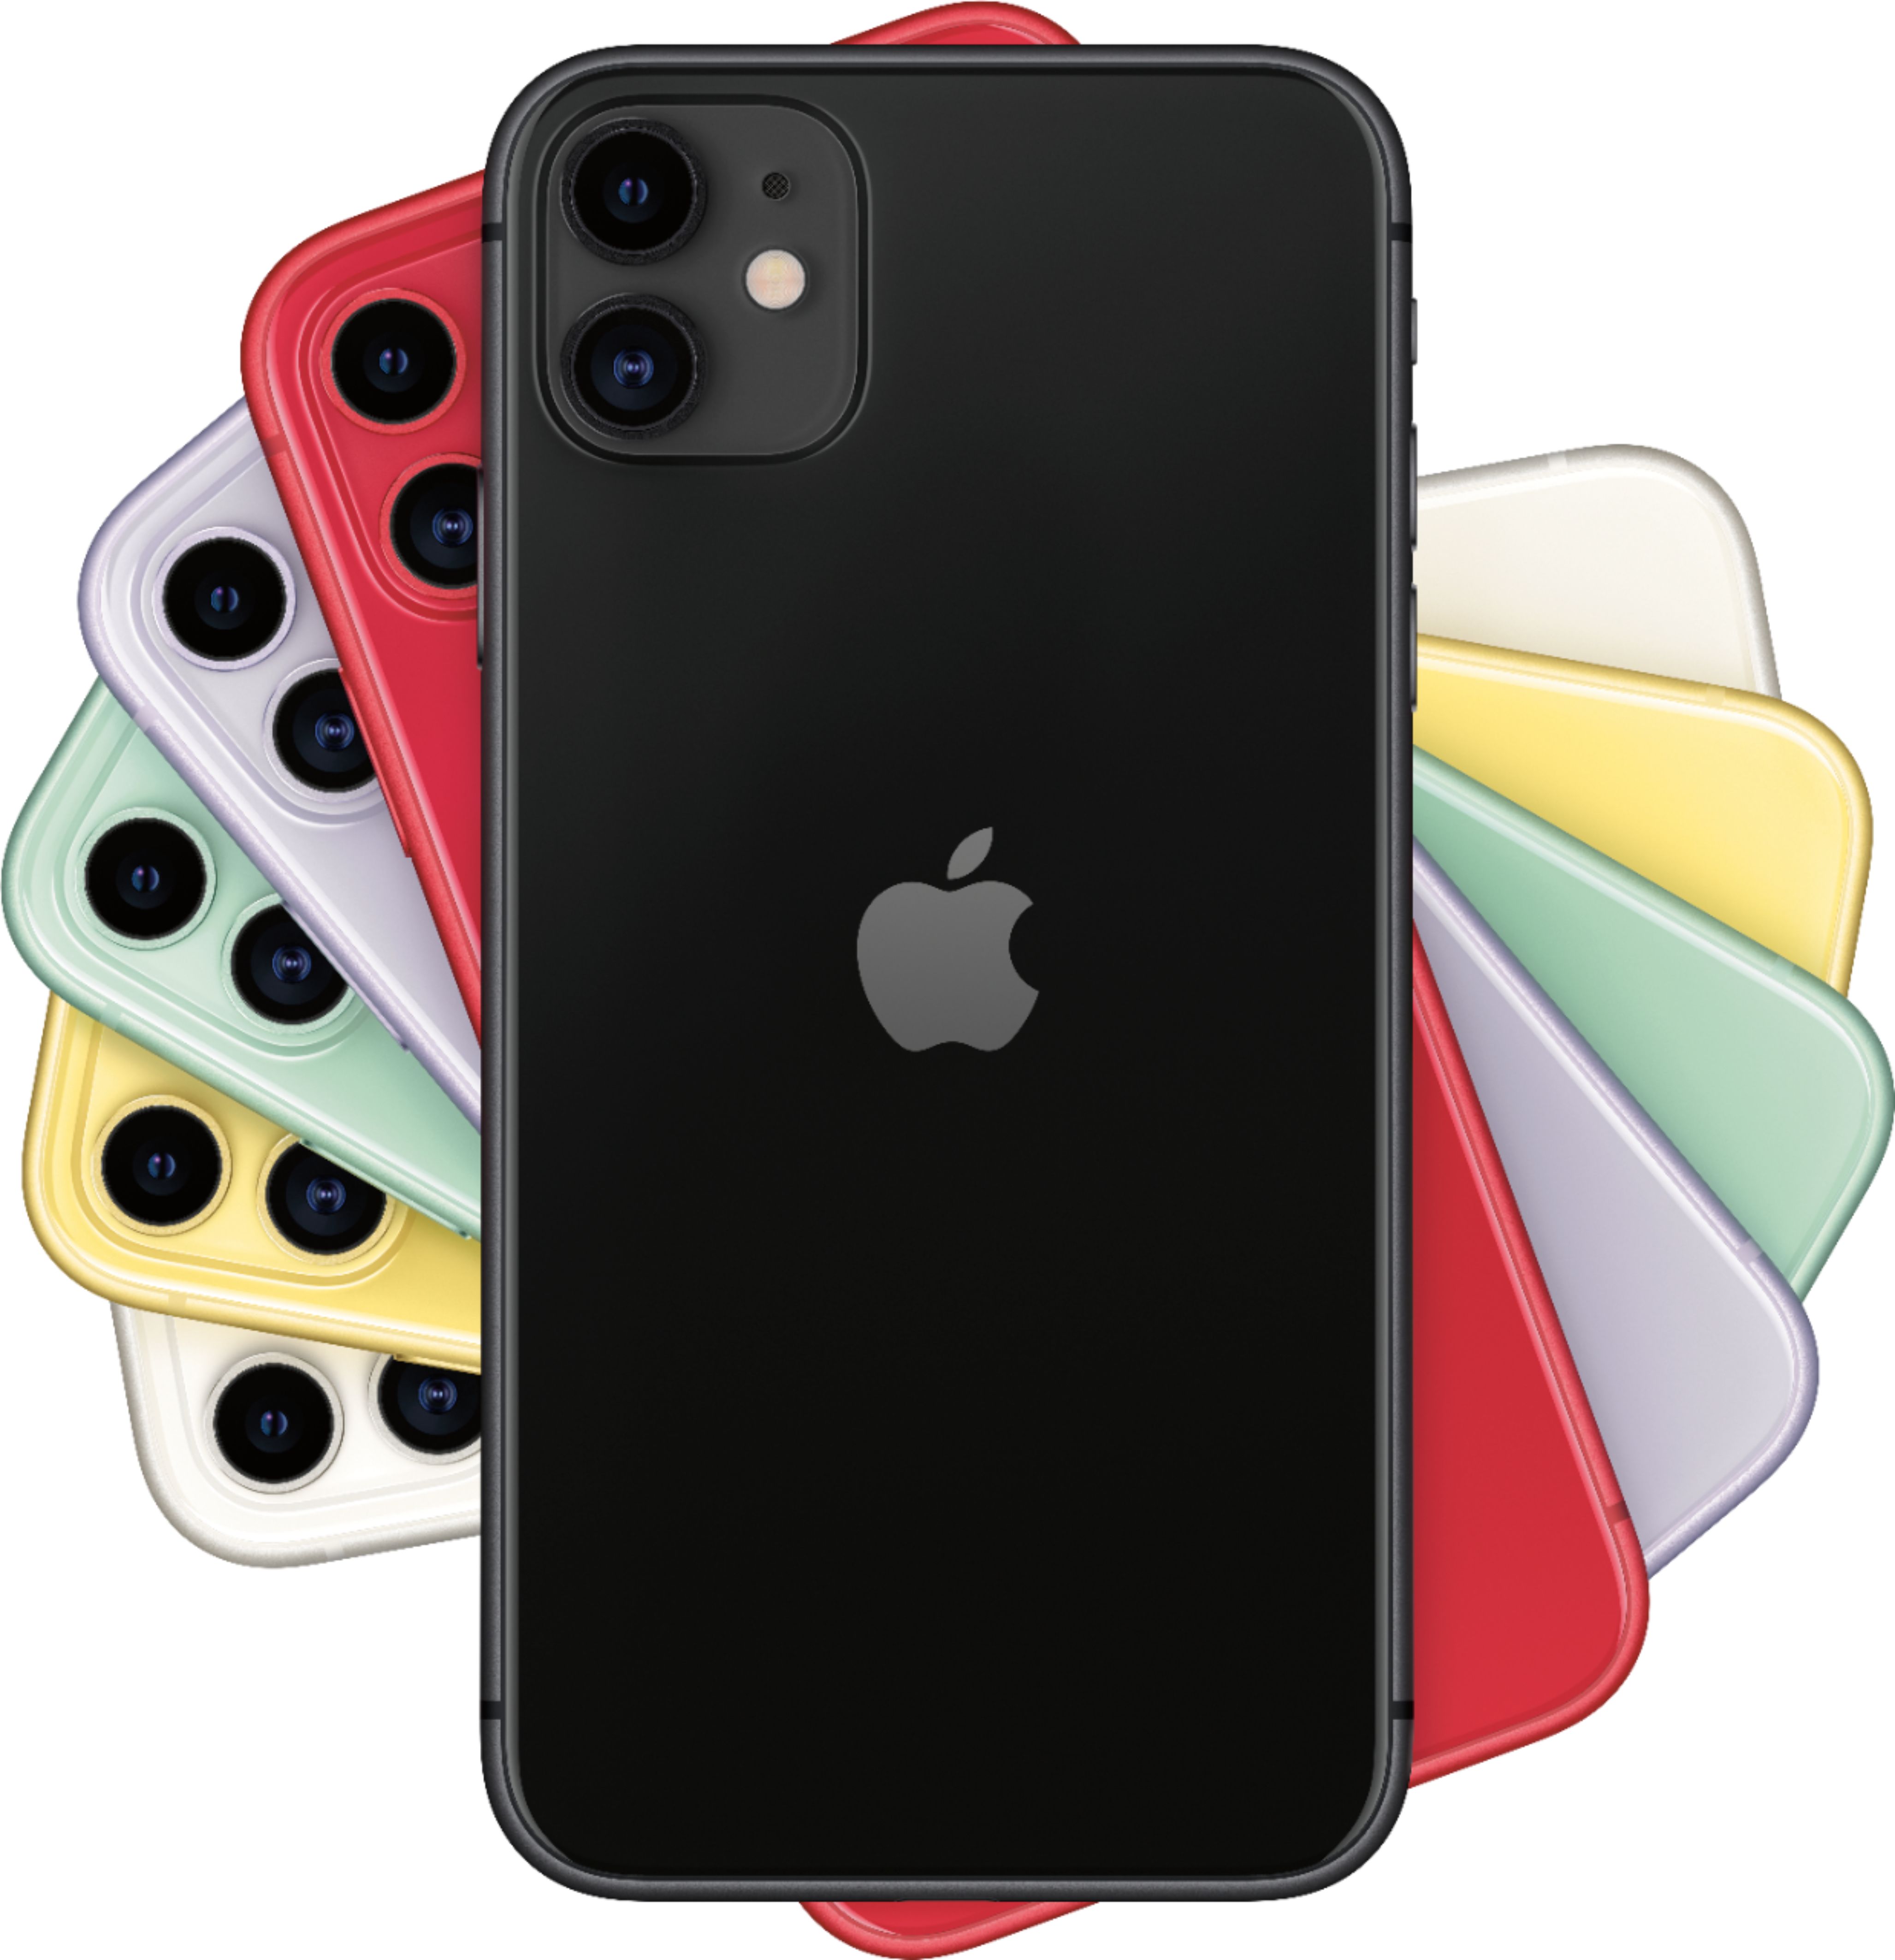 Apple iPhone 11 256GB Black (Unlocked) MWL12LL/A - Best Buy